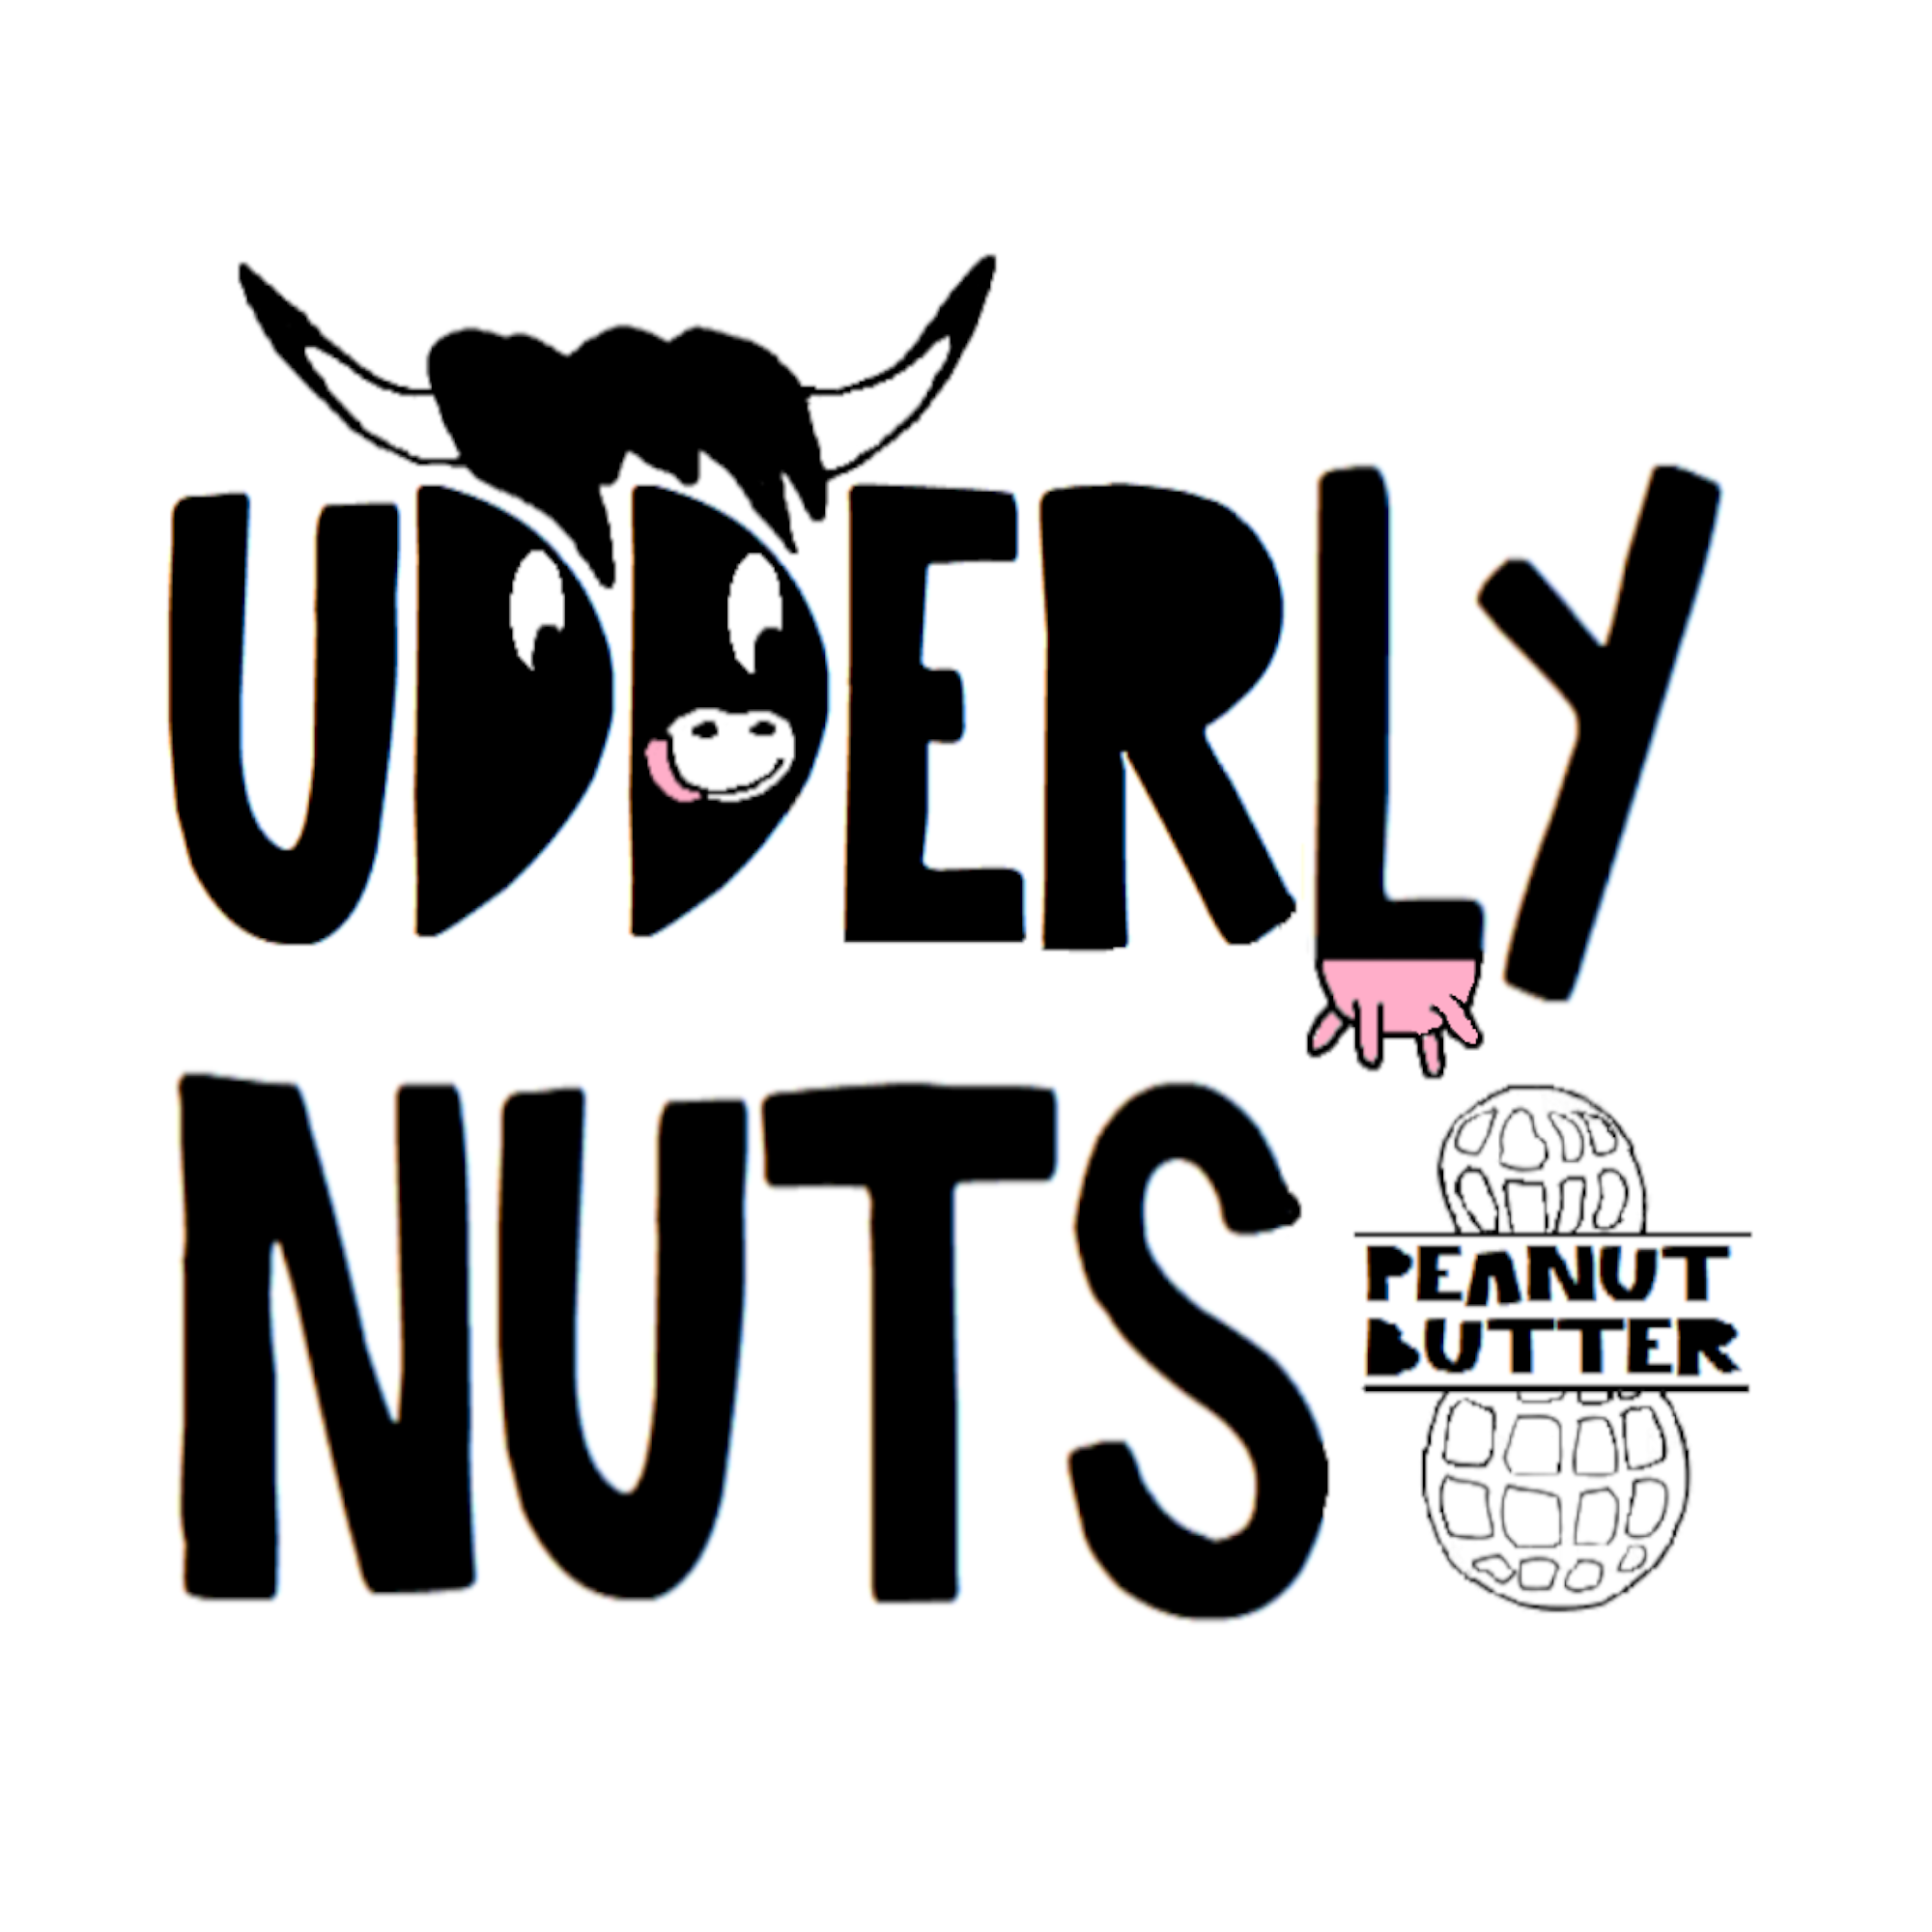 Udderly Nuts